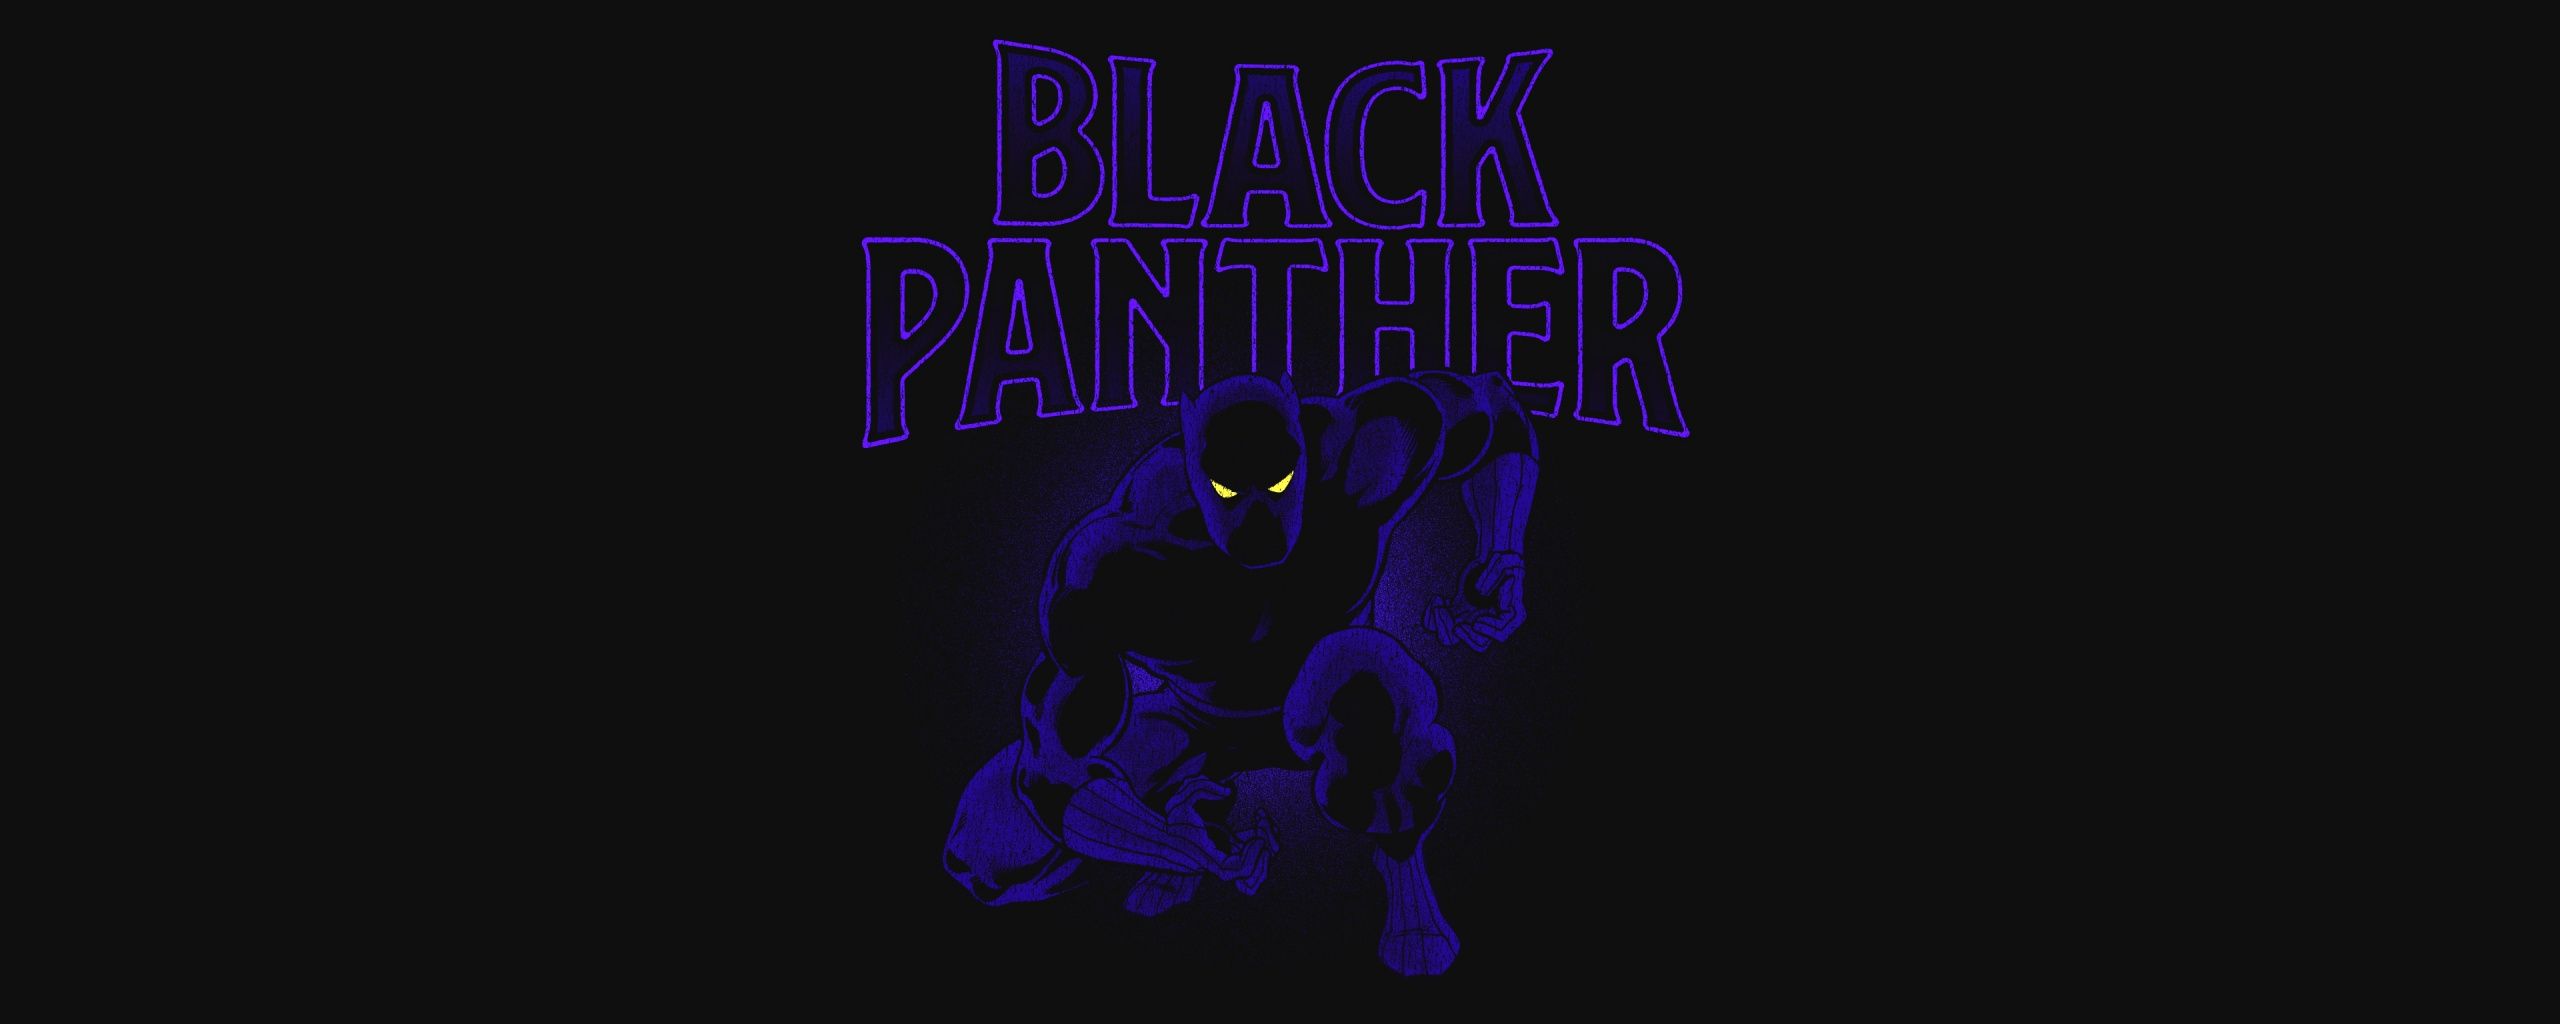 Download Black Panther, minimal, artwork, dark wallpaper, 2560x Dual Wide, Wide 21: Widescreen